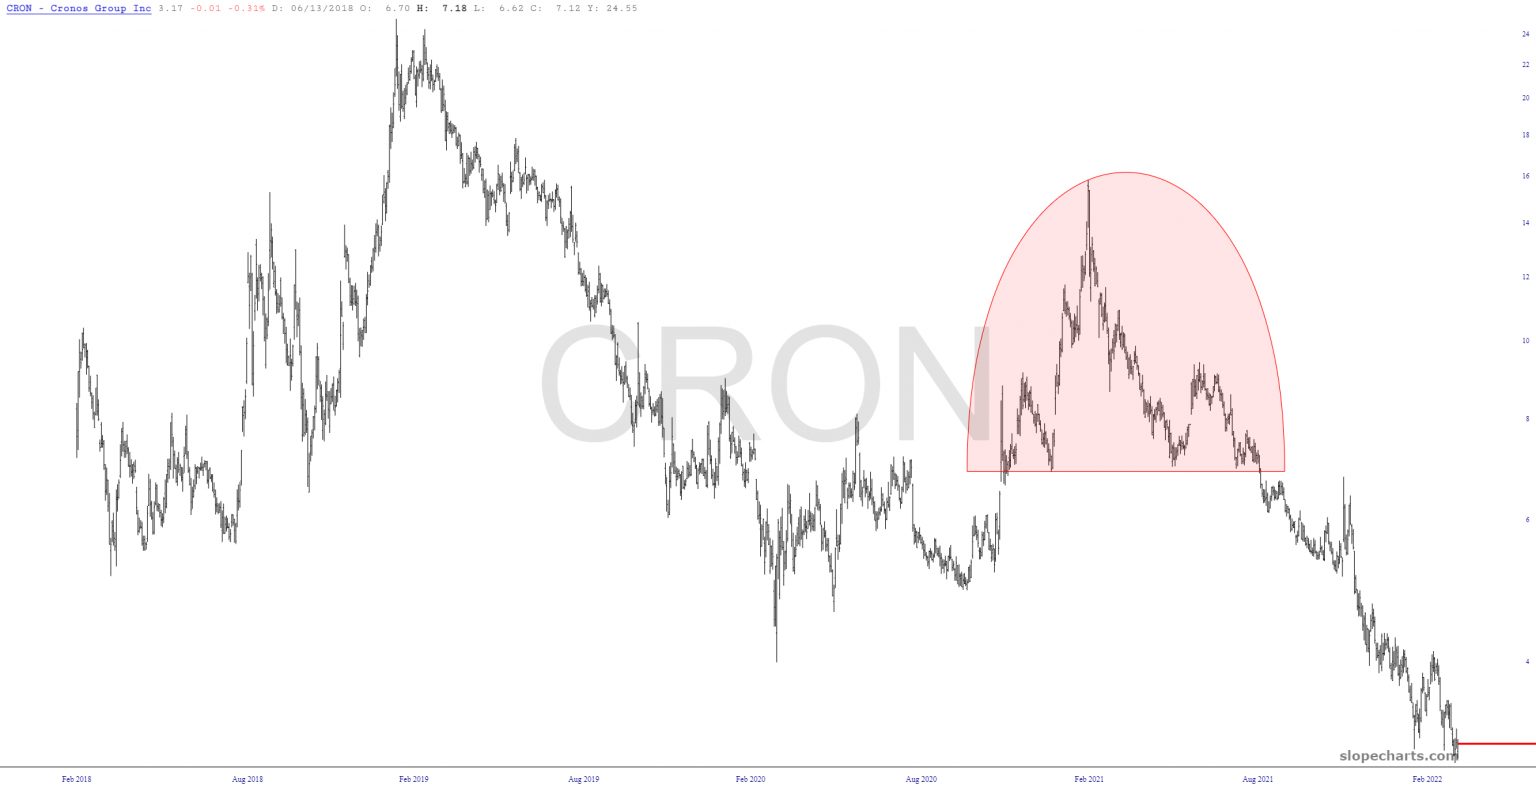 Long-Term CRON Chart.